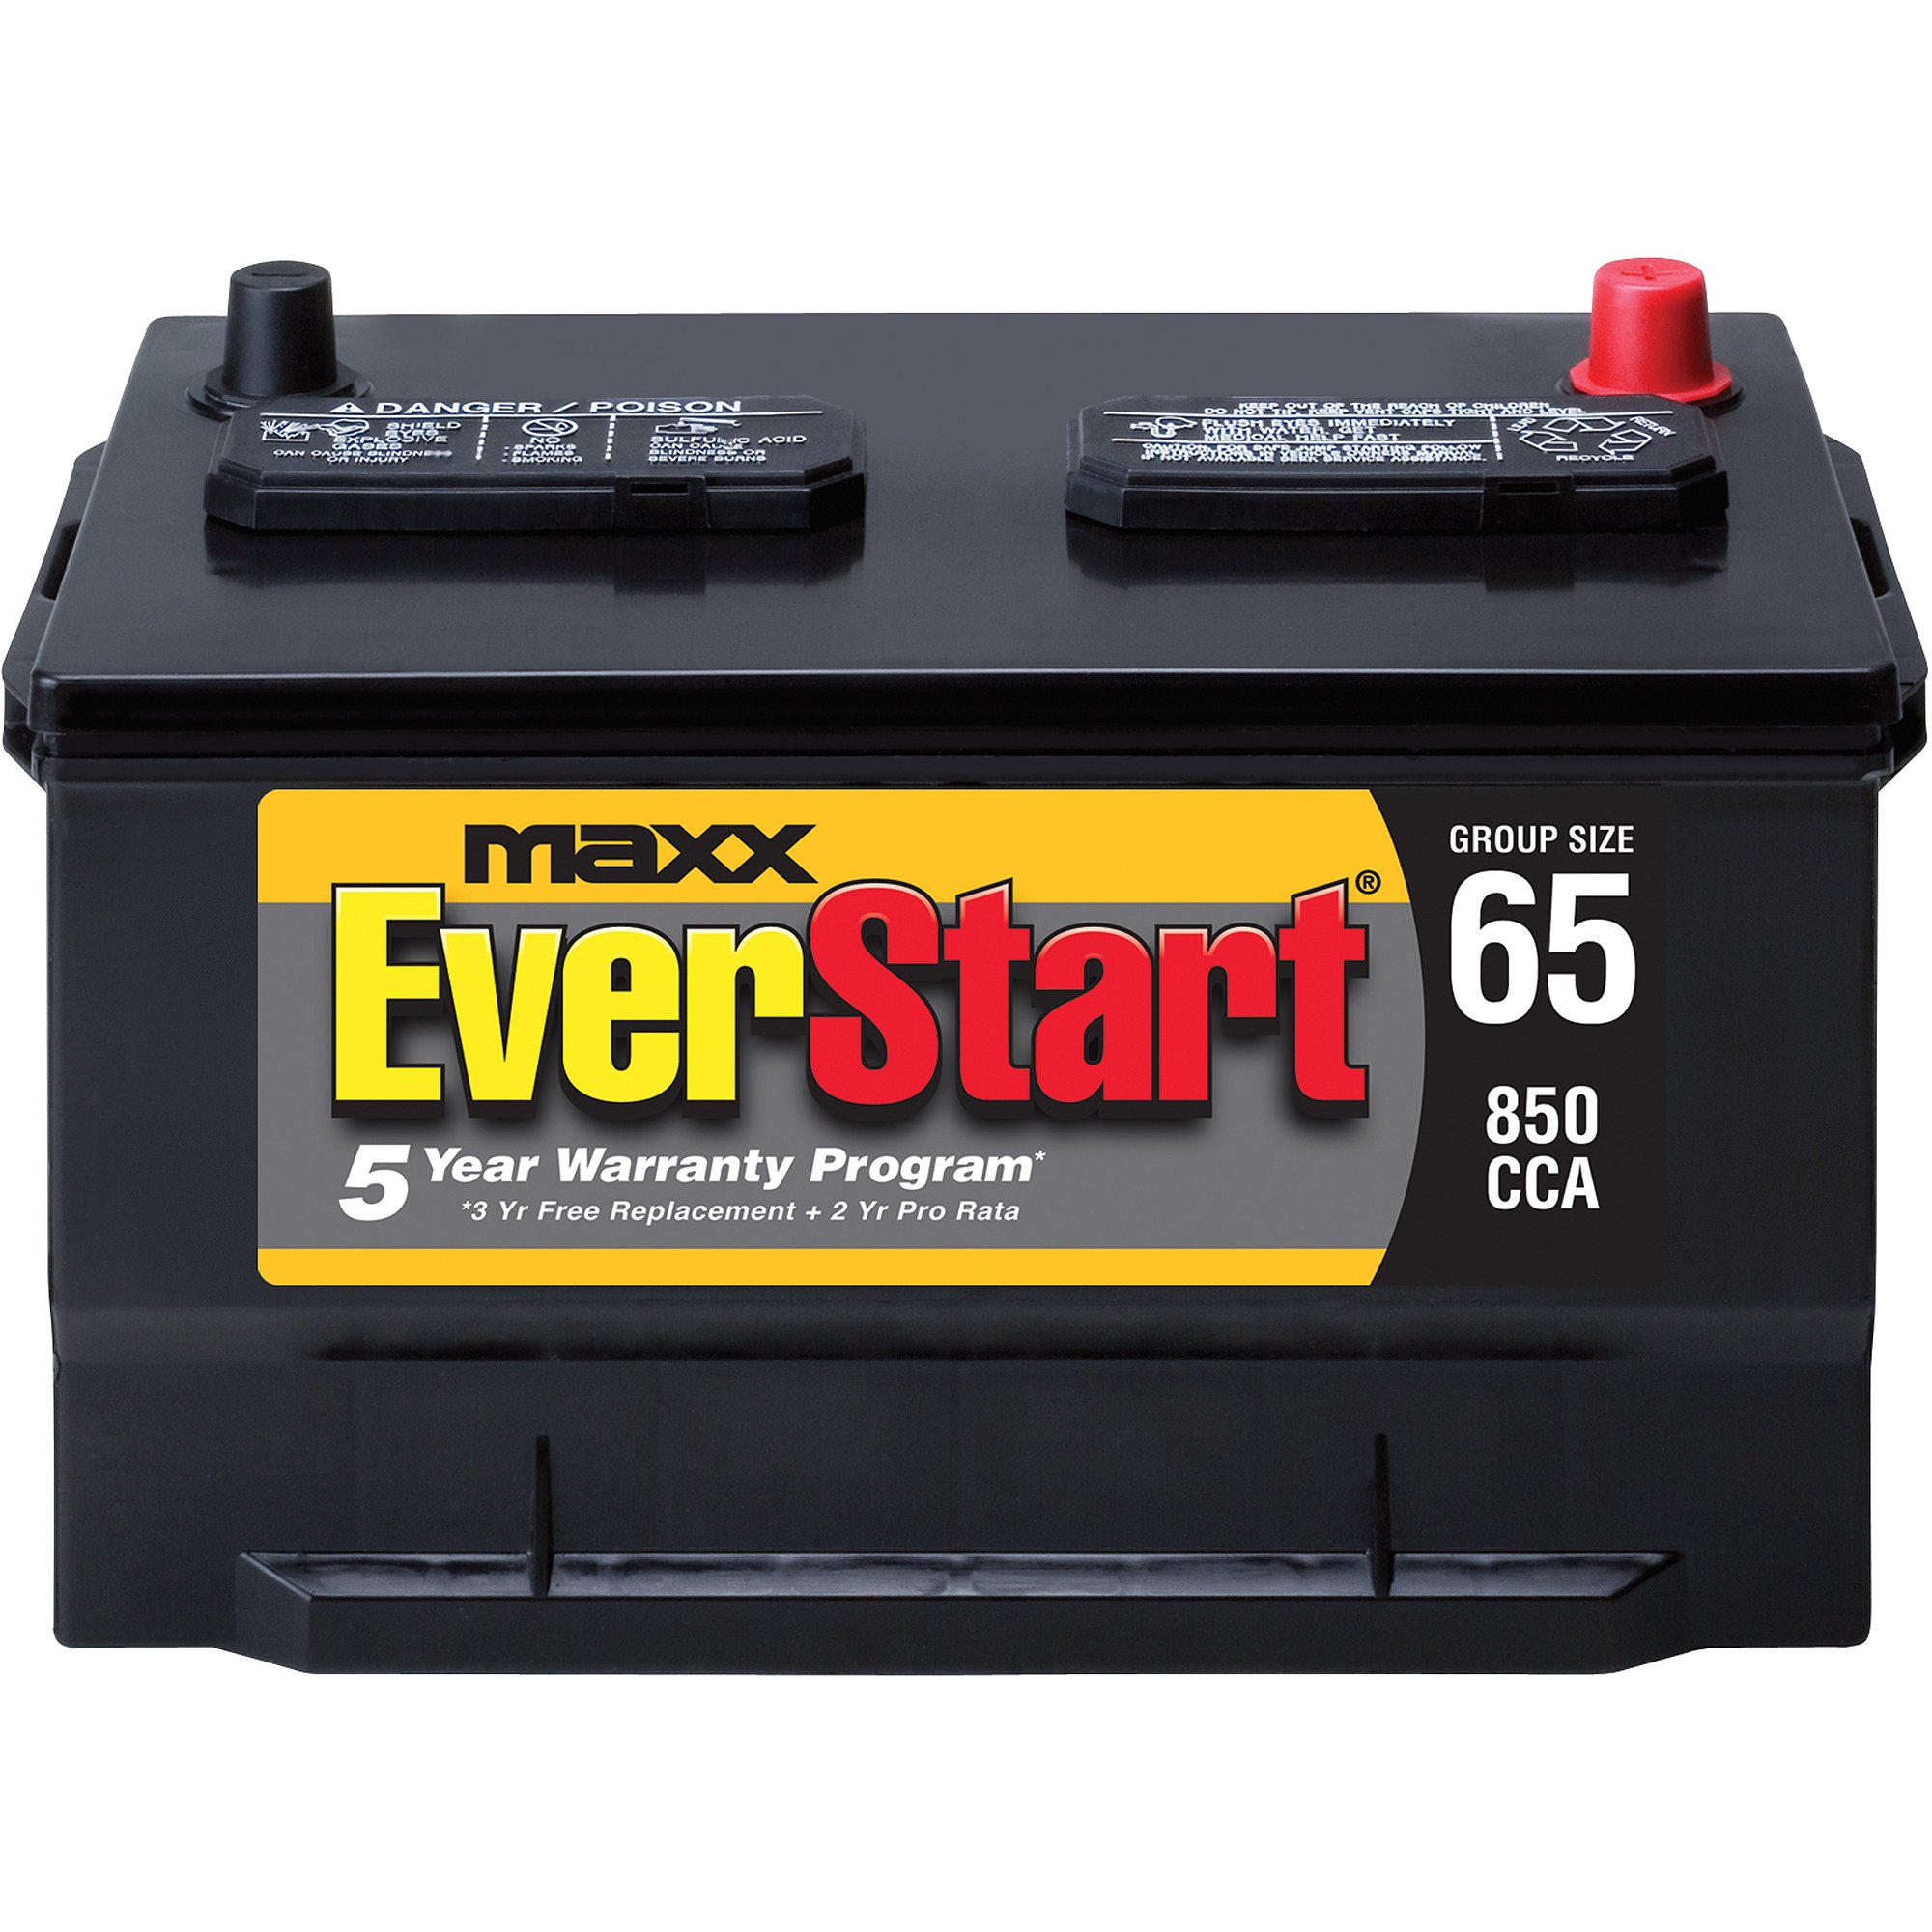 EverStart Maxx Lead Acid Automotive Battery, Group 65n ...